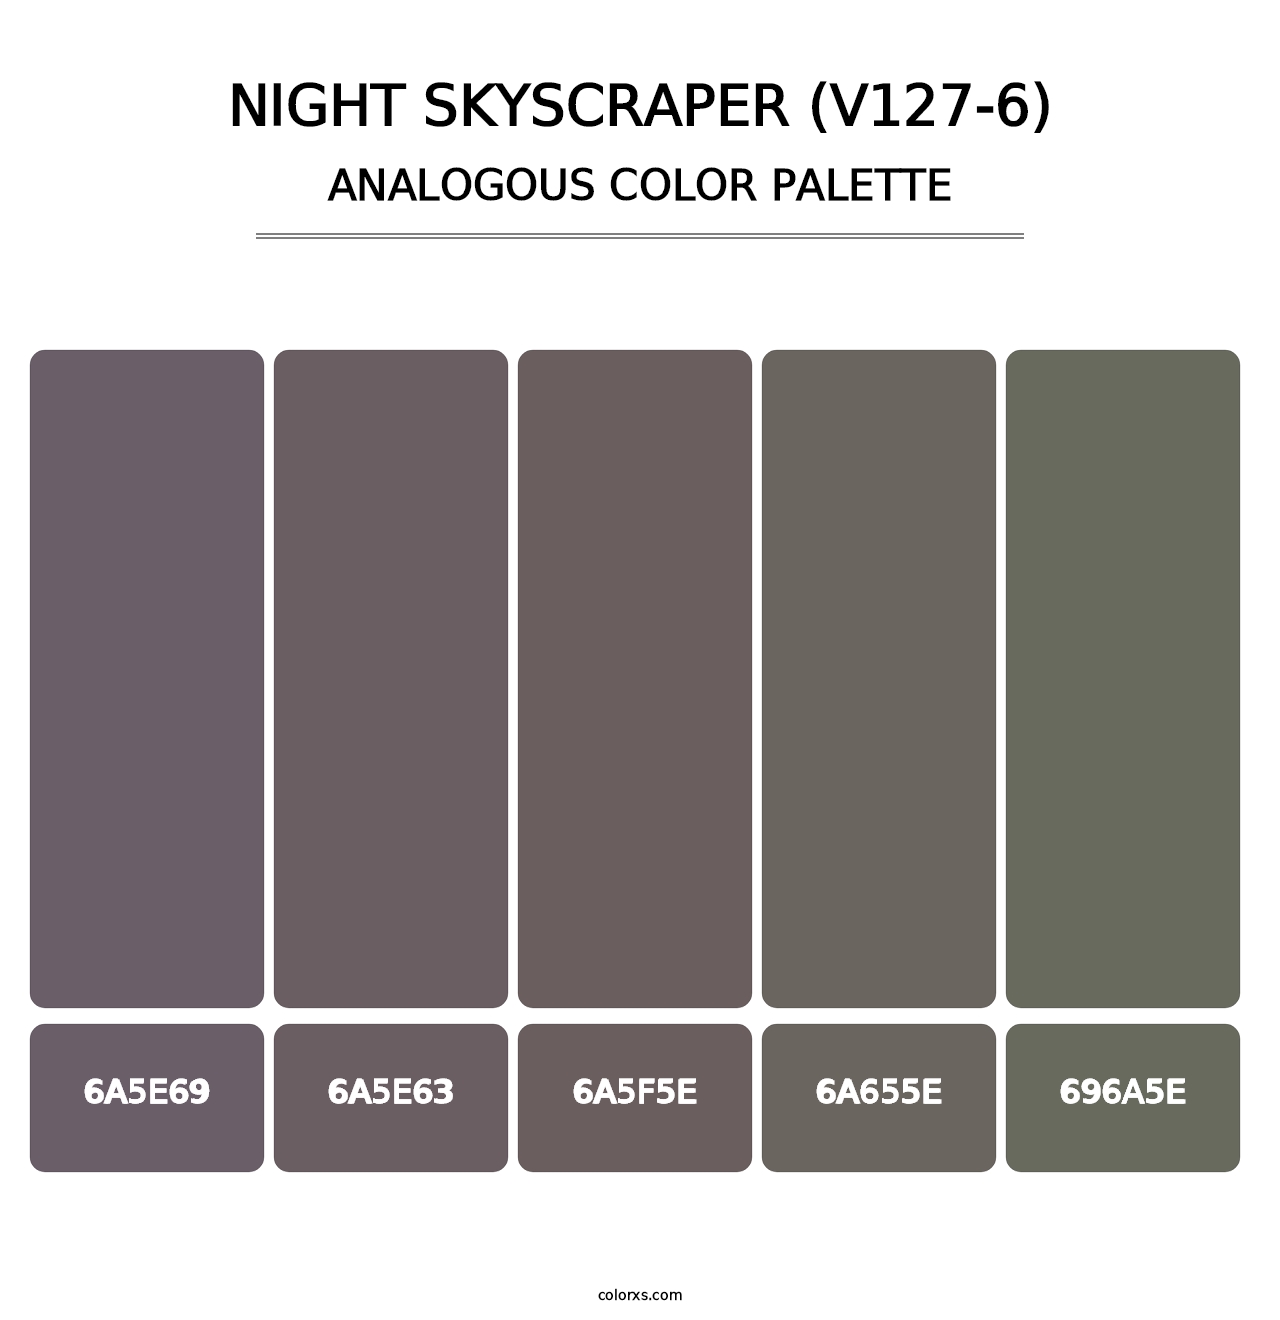 Night Skyscraper (V127-6) - Analogous Color Palette